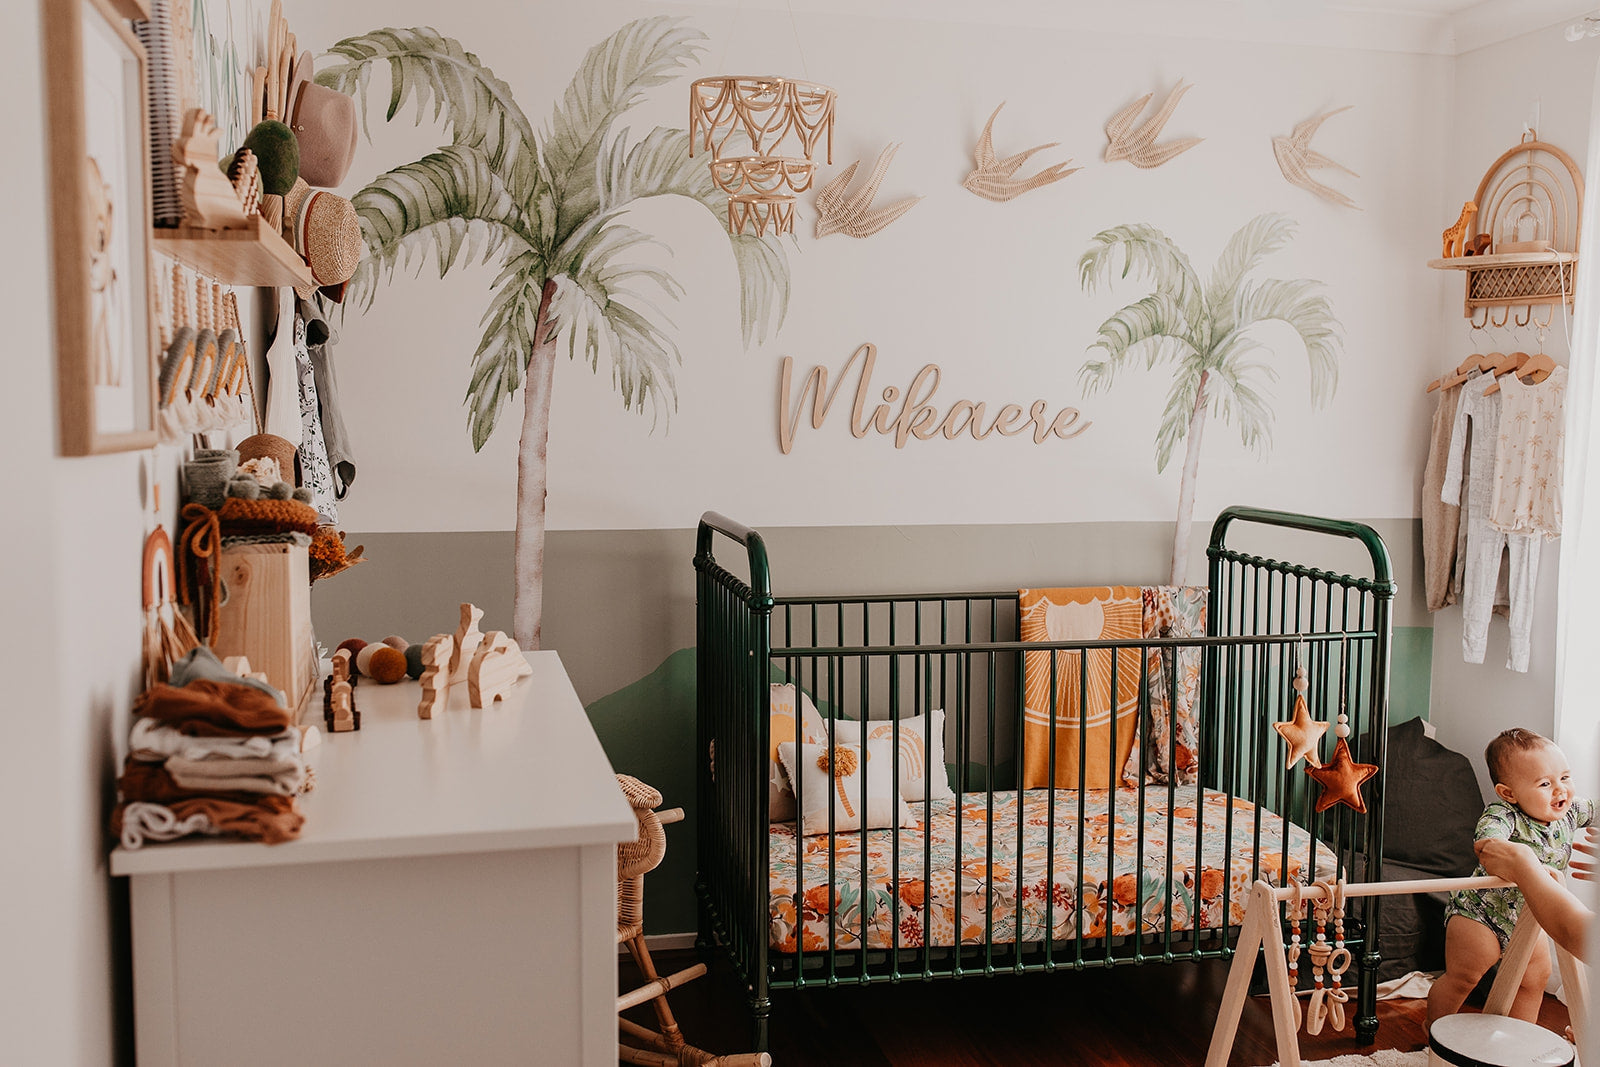 Mikaere's Nursery | A Baby Room That Celebrates Nature-OiOi